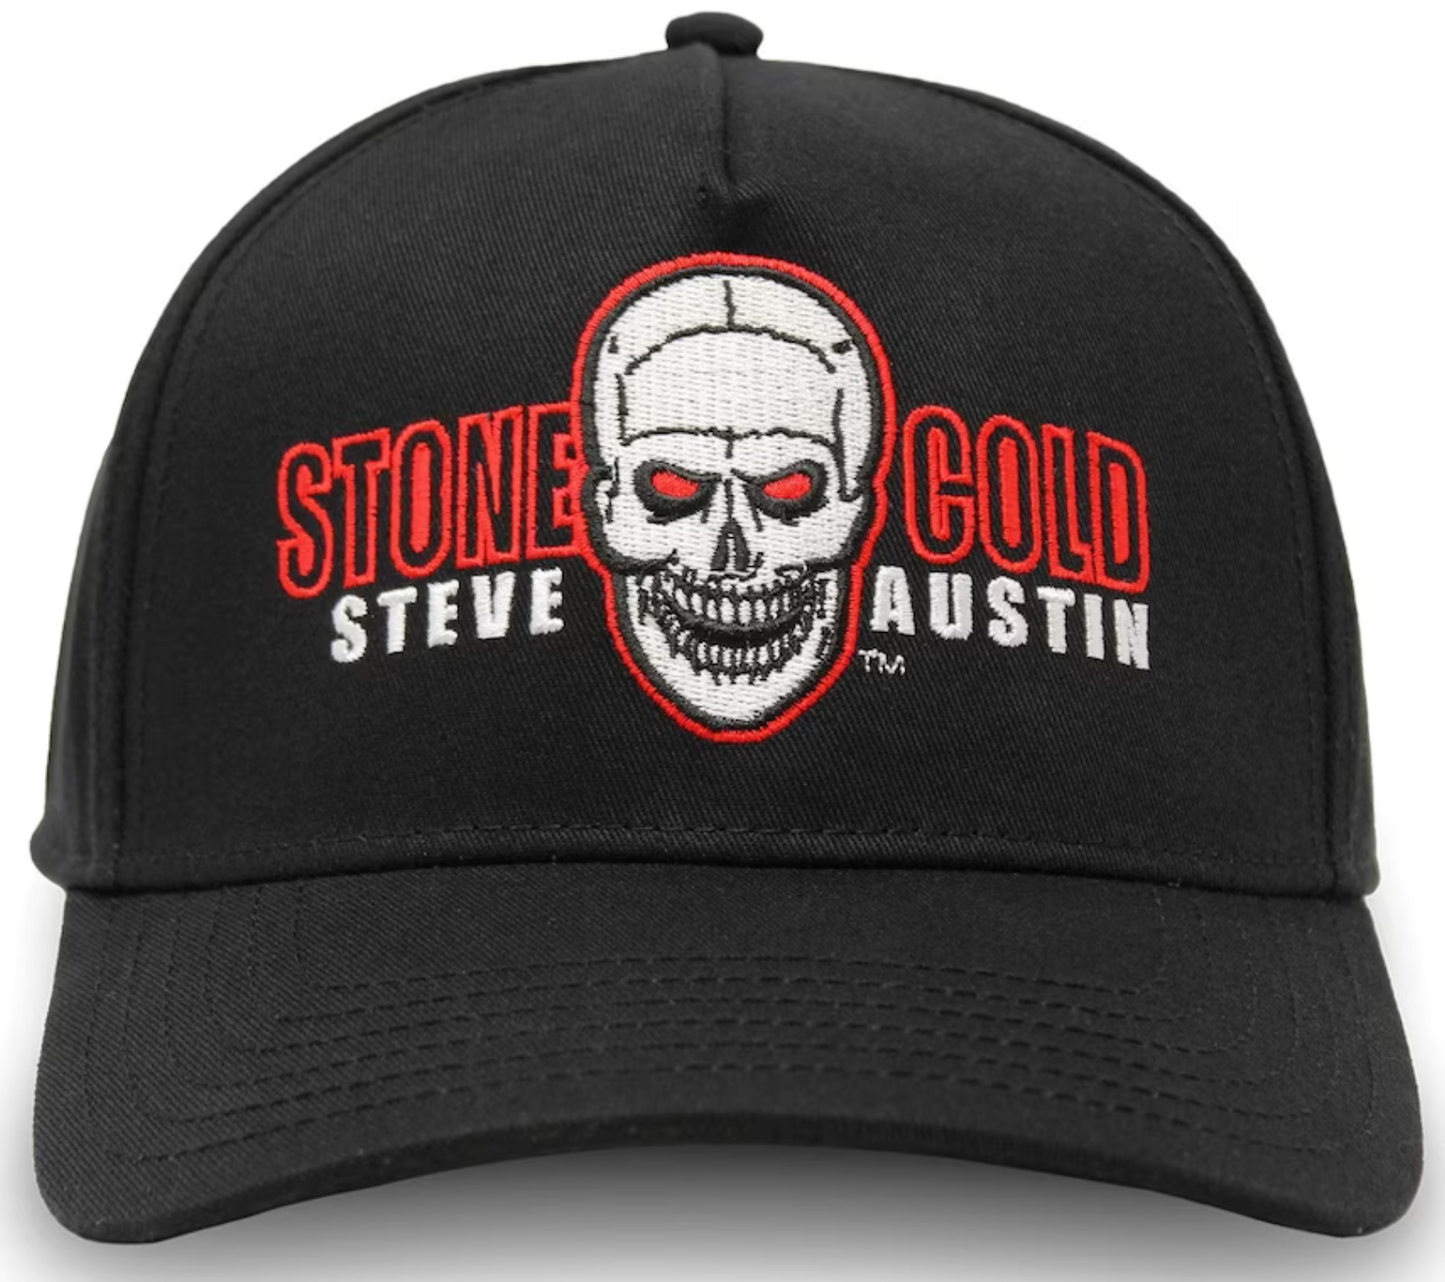 WWE Black "Stone Cold" Steve Austin Adjustable Hat